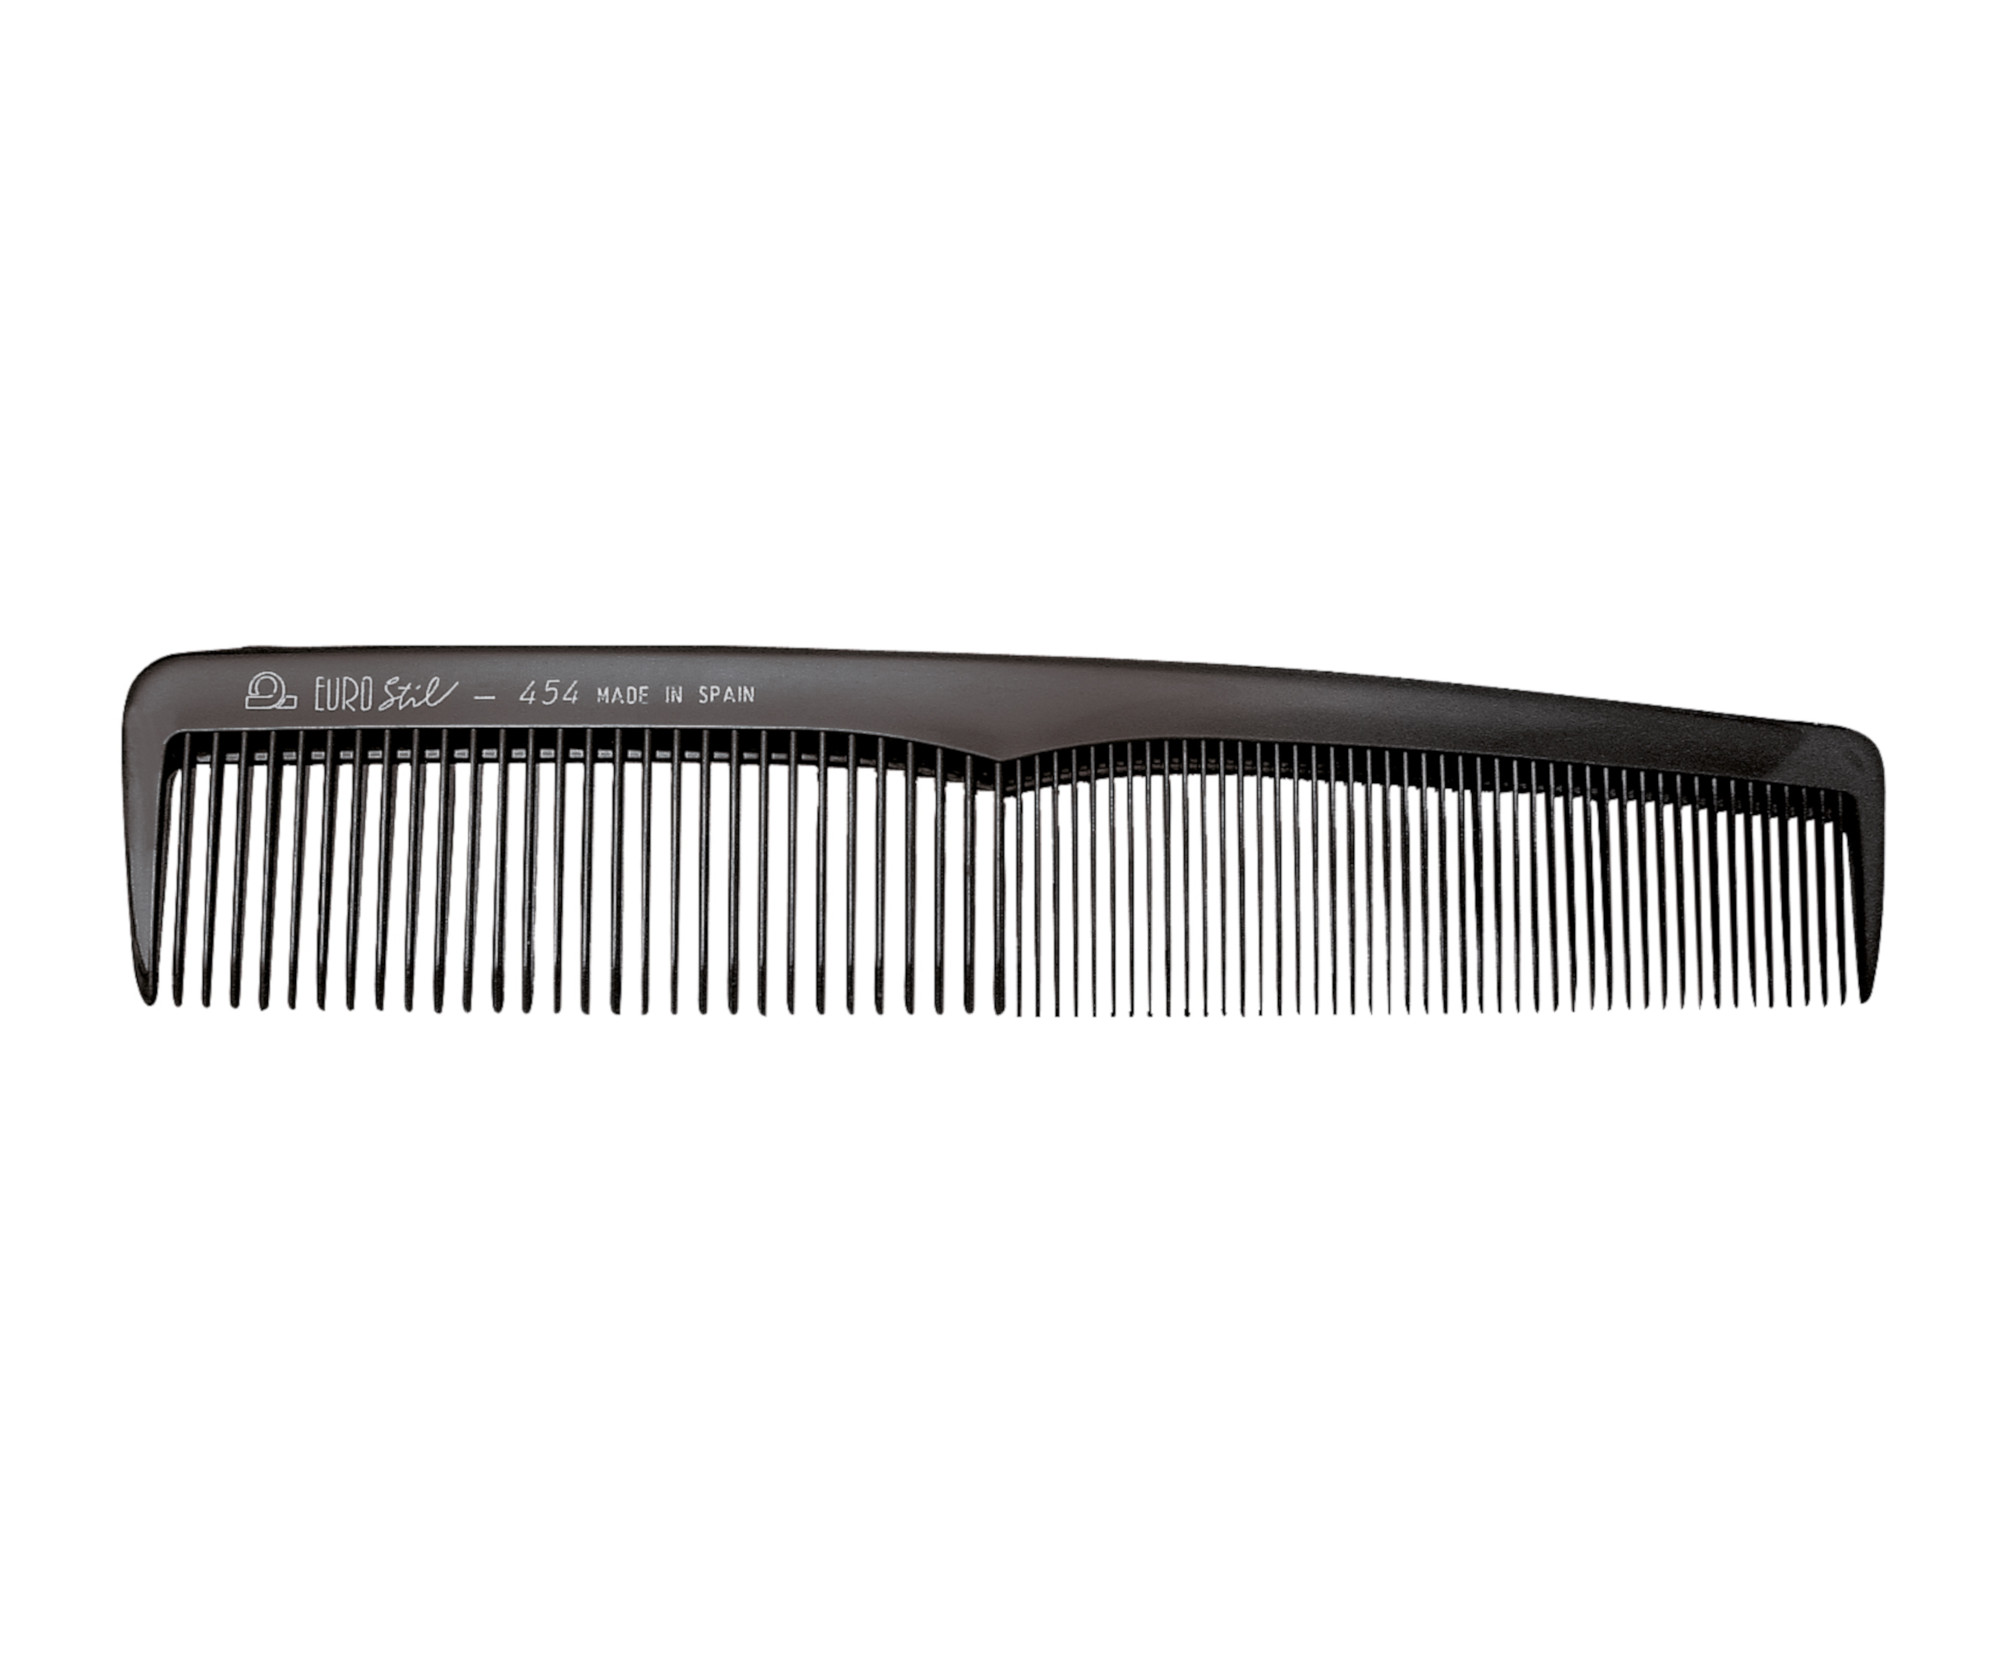 Hřeben Eurostil Profesional Cutting Barber Comb - 19,5 cm (00454)